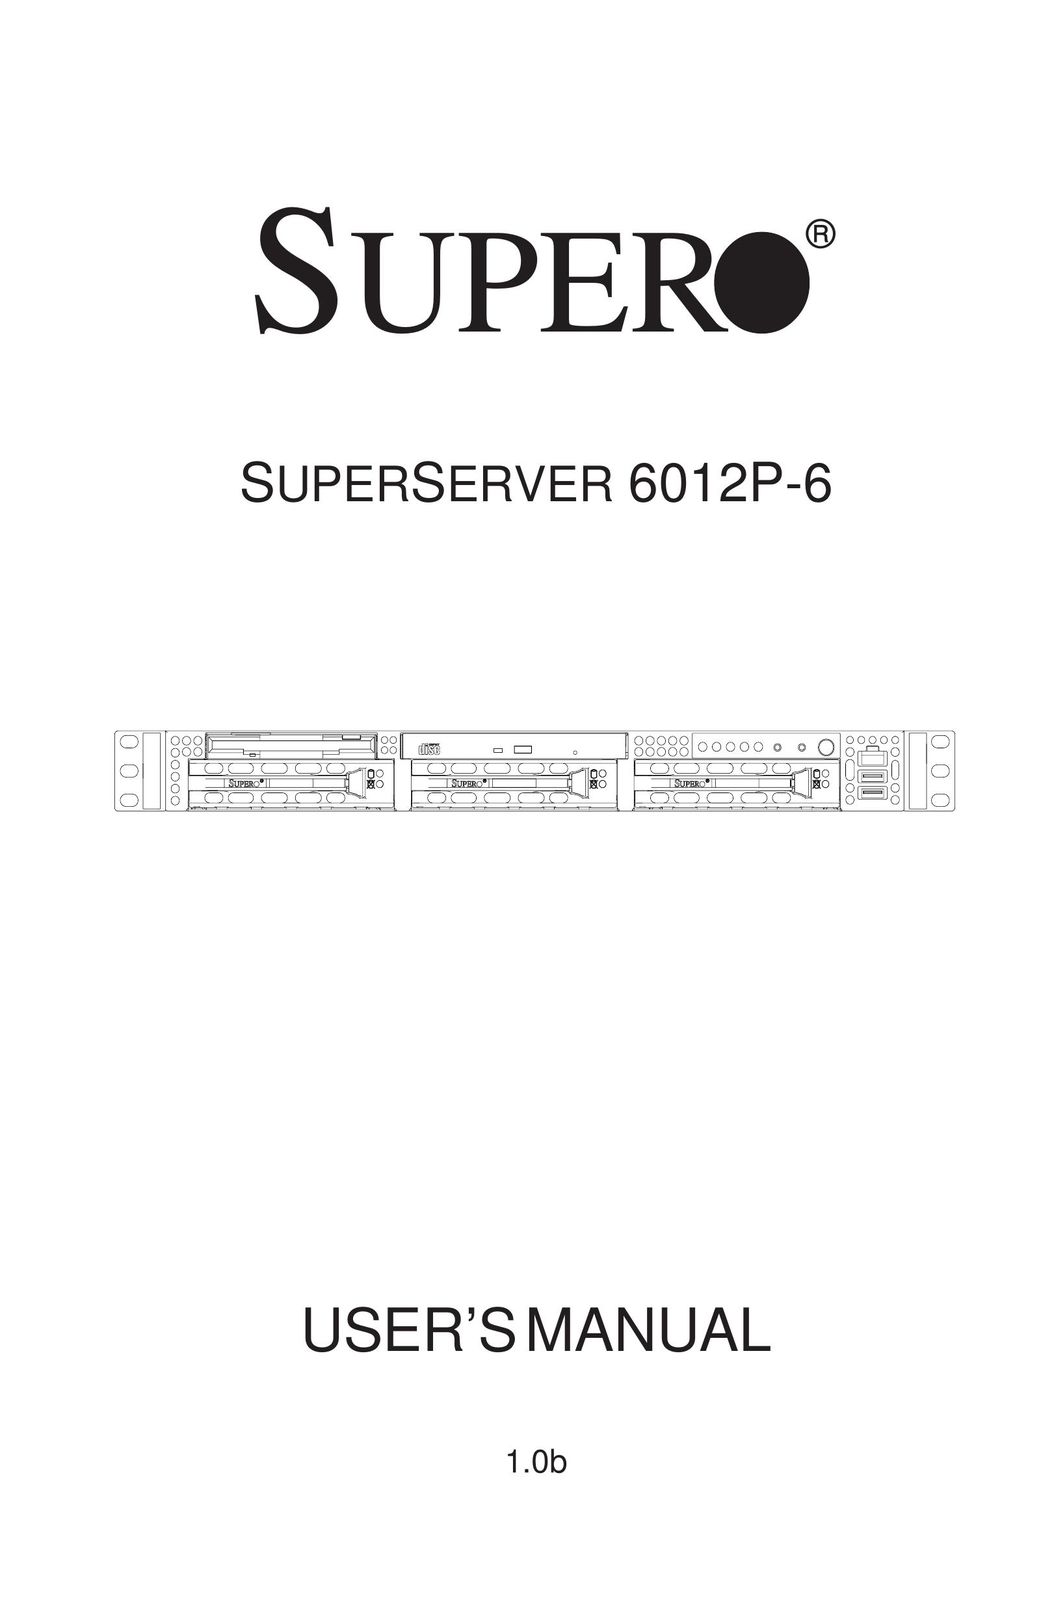 SUPER MICRO Computer 6012P-6 Home Theater Server User Manual